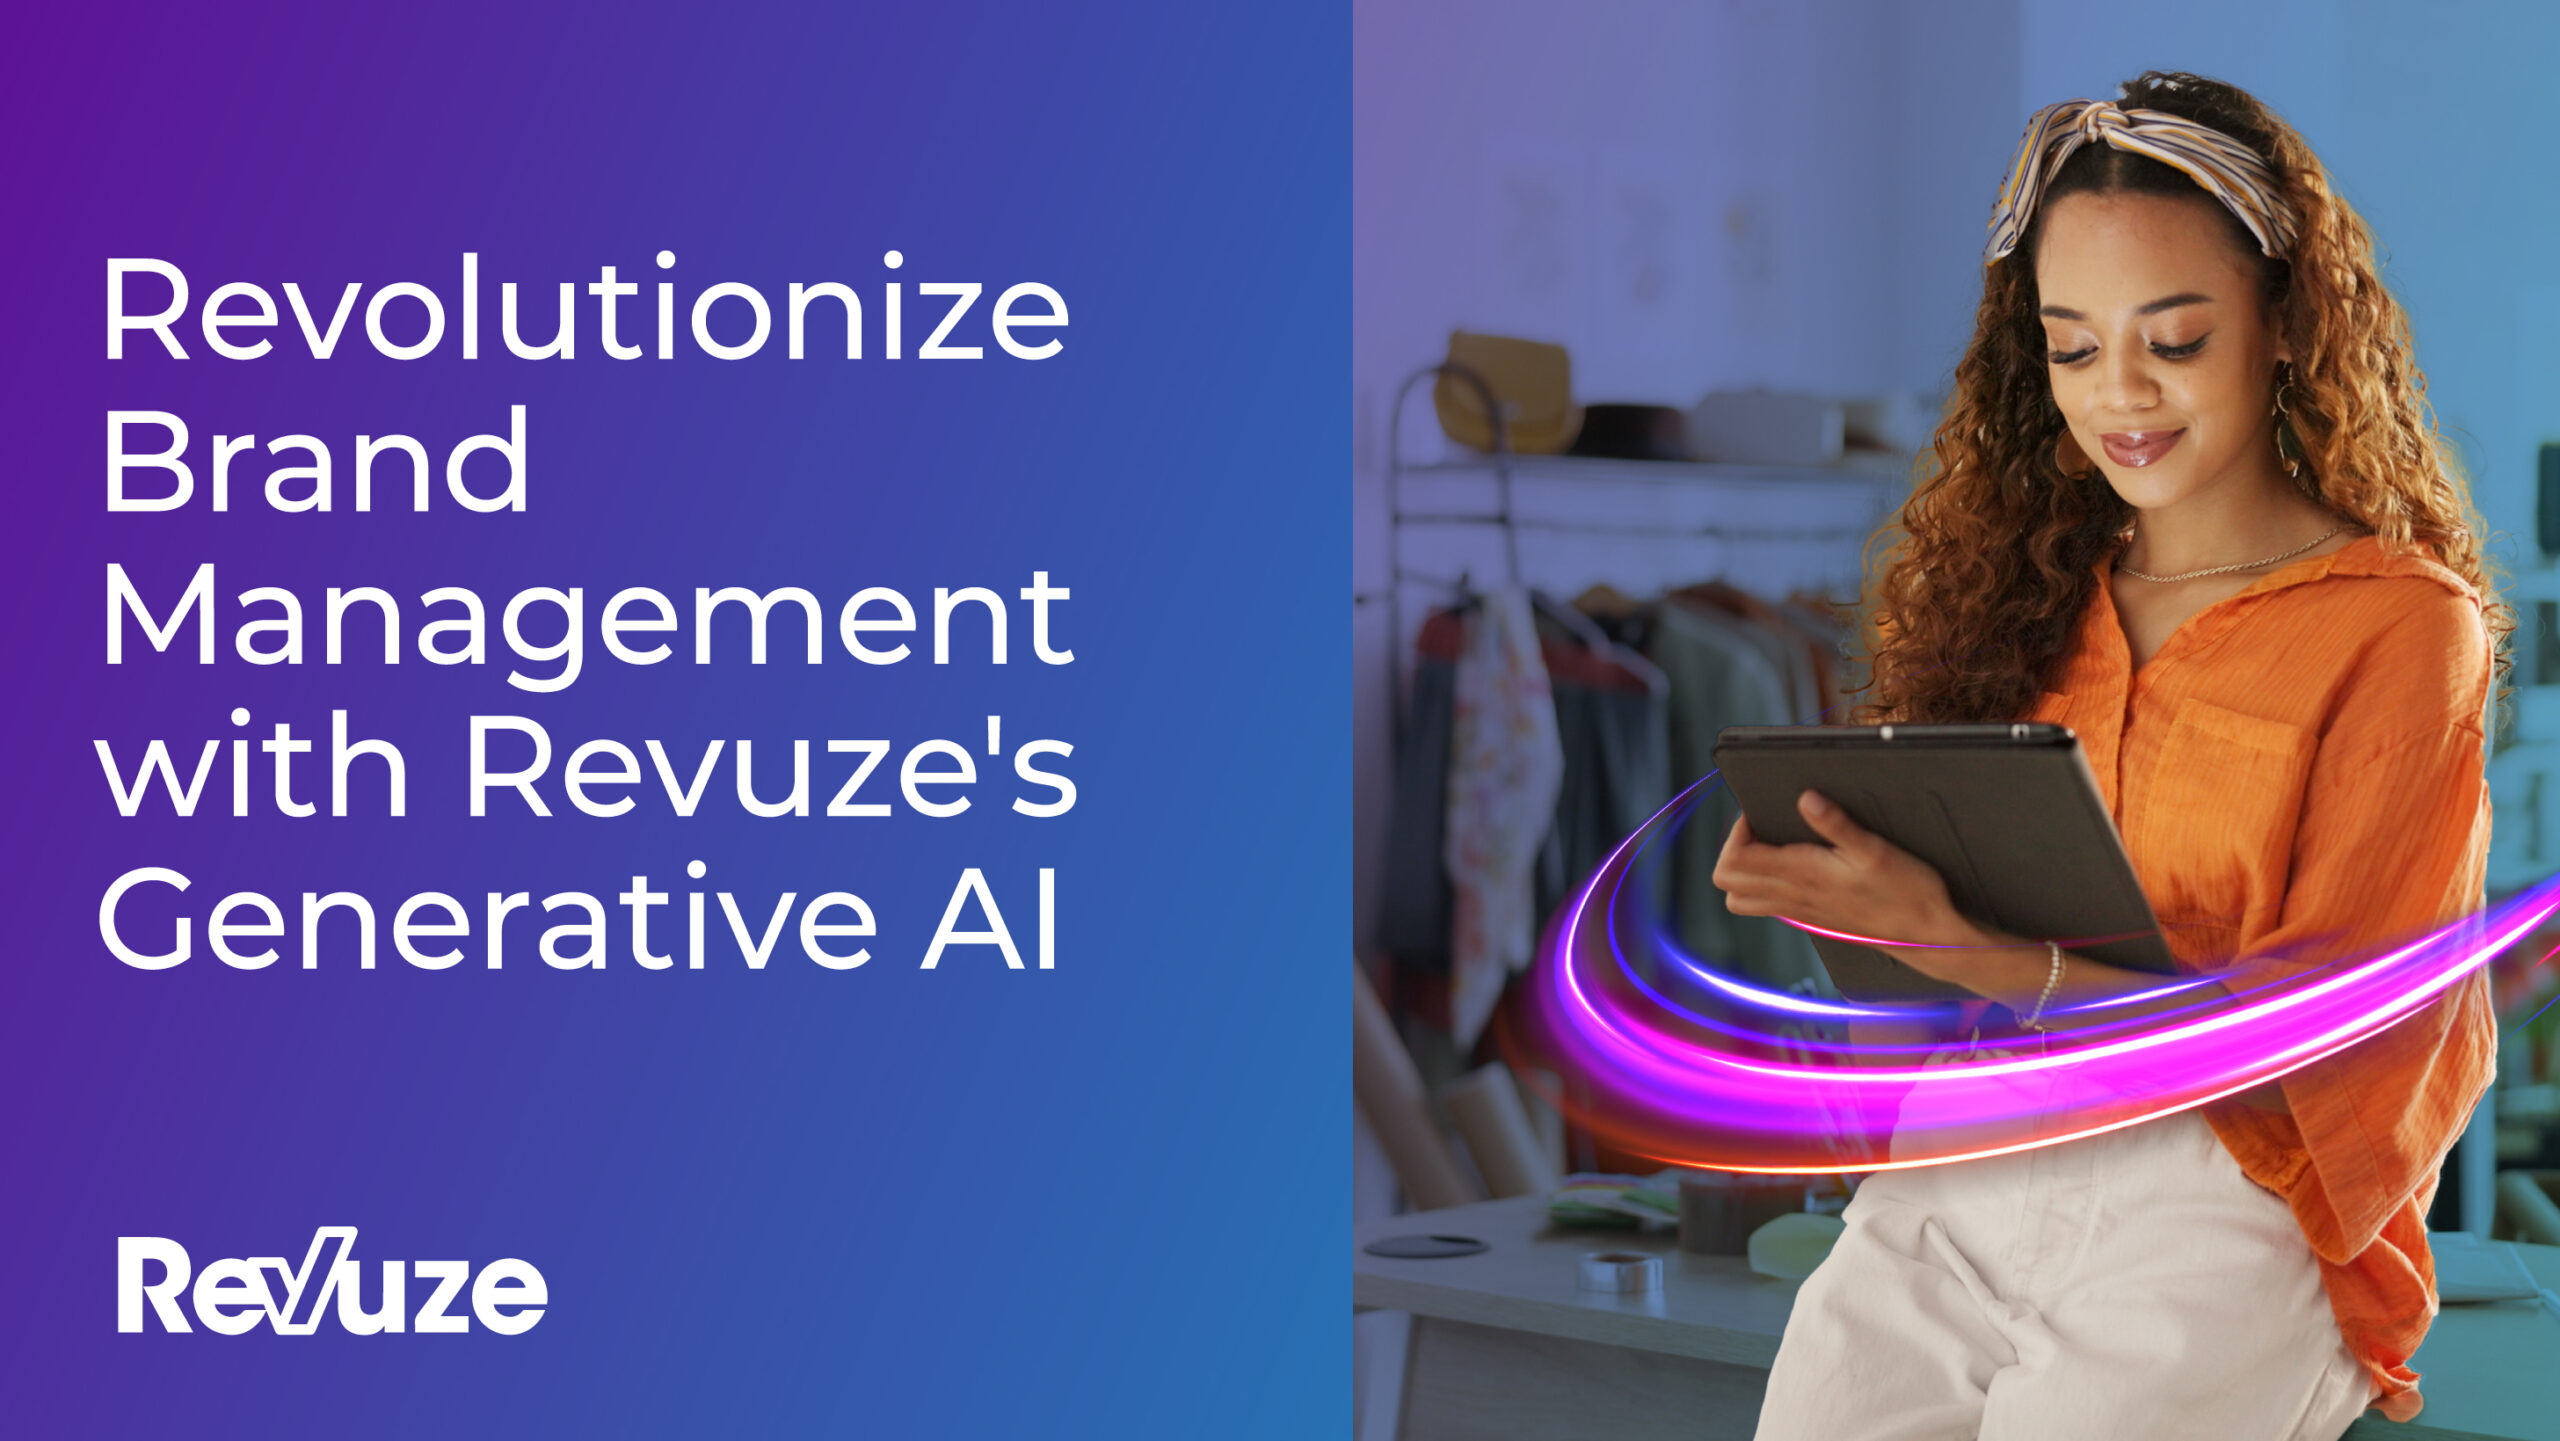 Revolutionize Brand Management with Generative AI